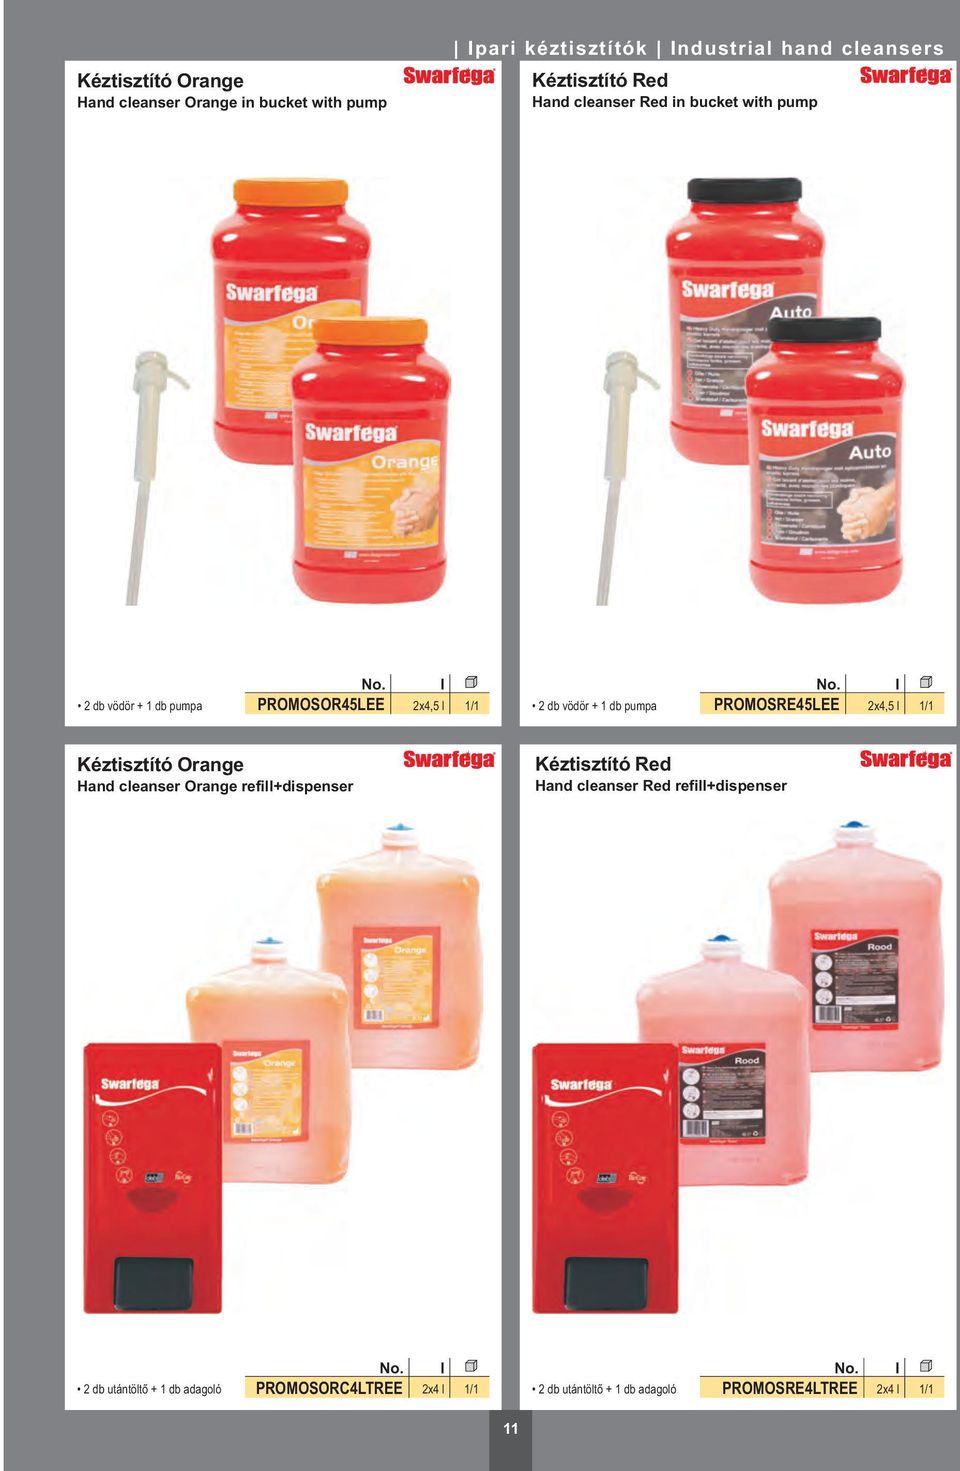 PROMOSRE45LEE 2x4,5 l Kéztisztító Orange Hand cleanser Orange refill+dispenser Kéztisztító Red Hand cleanser Red